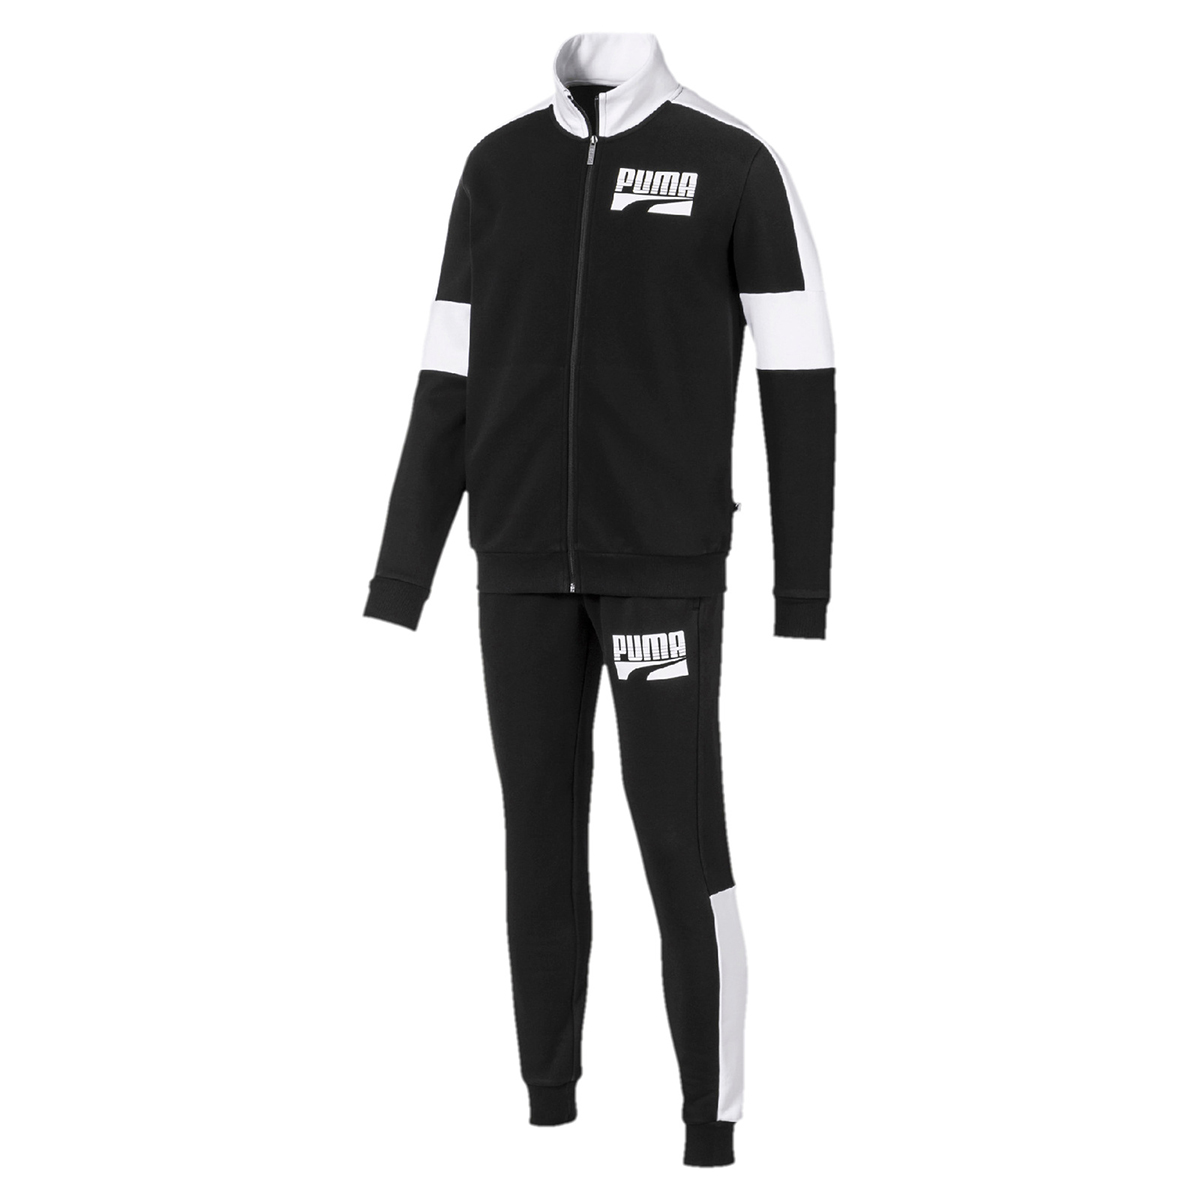 Puma Rebel Suit cl B Kinder Trainingsanzug Sportanzug 580314 01